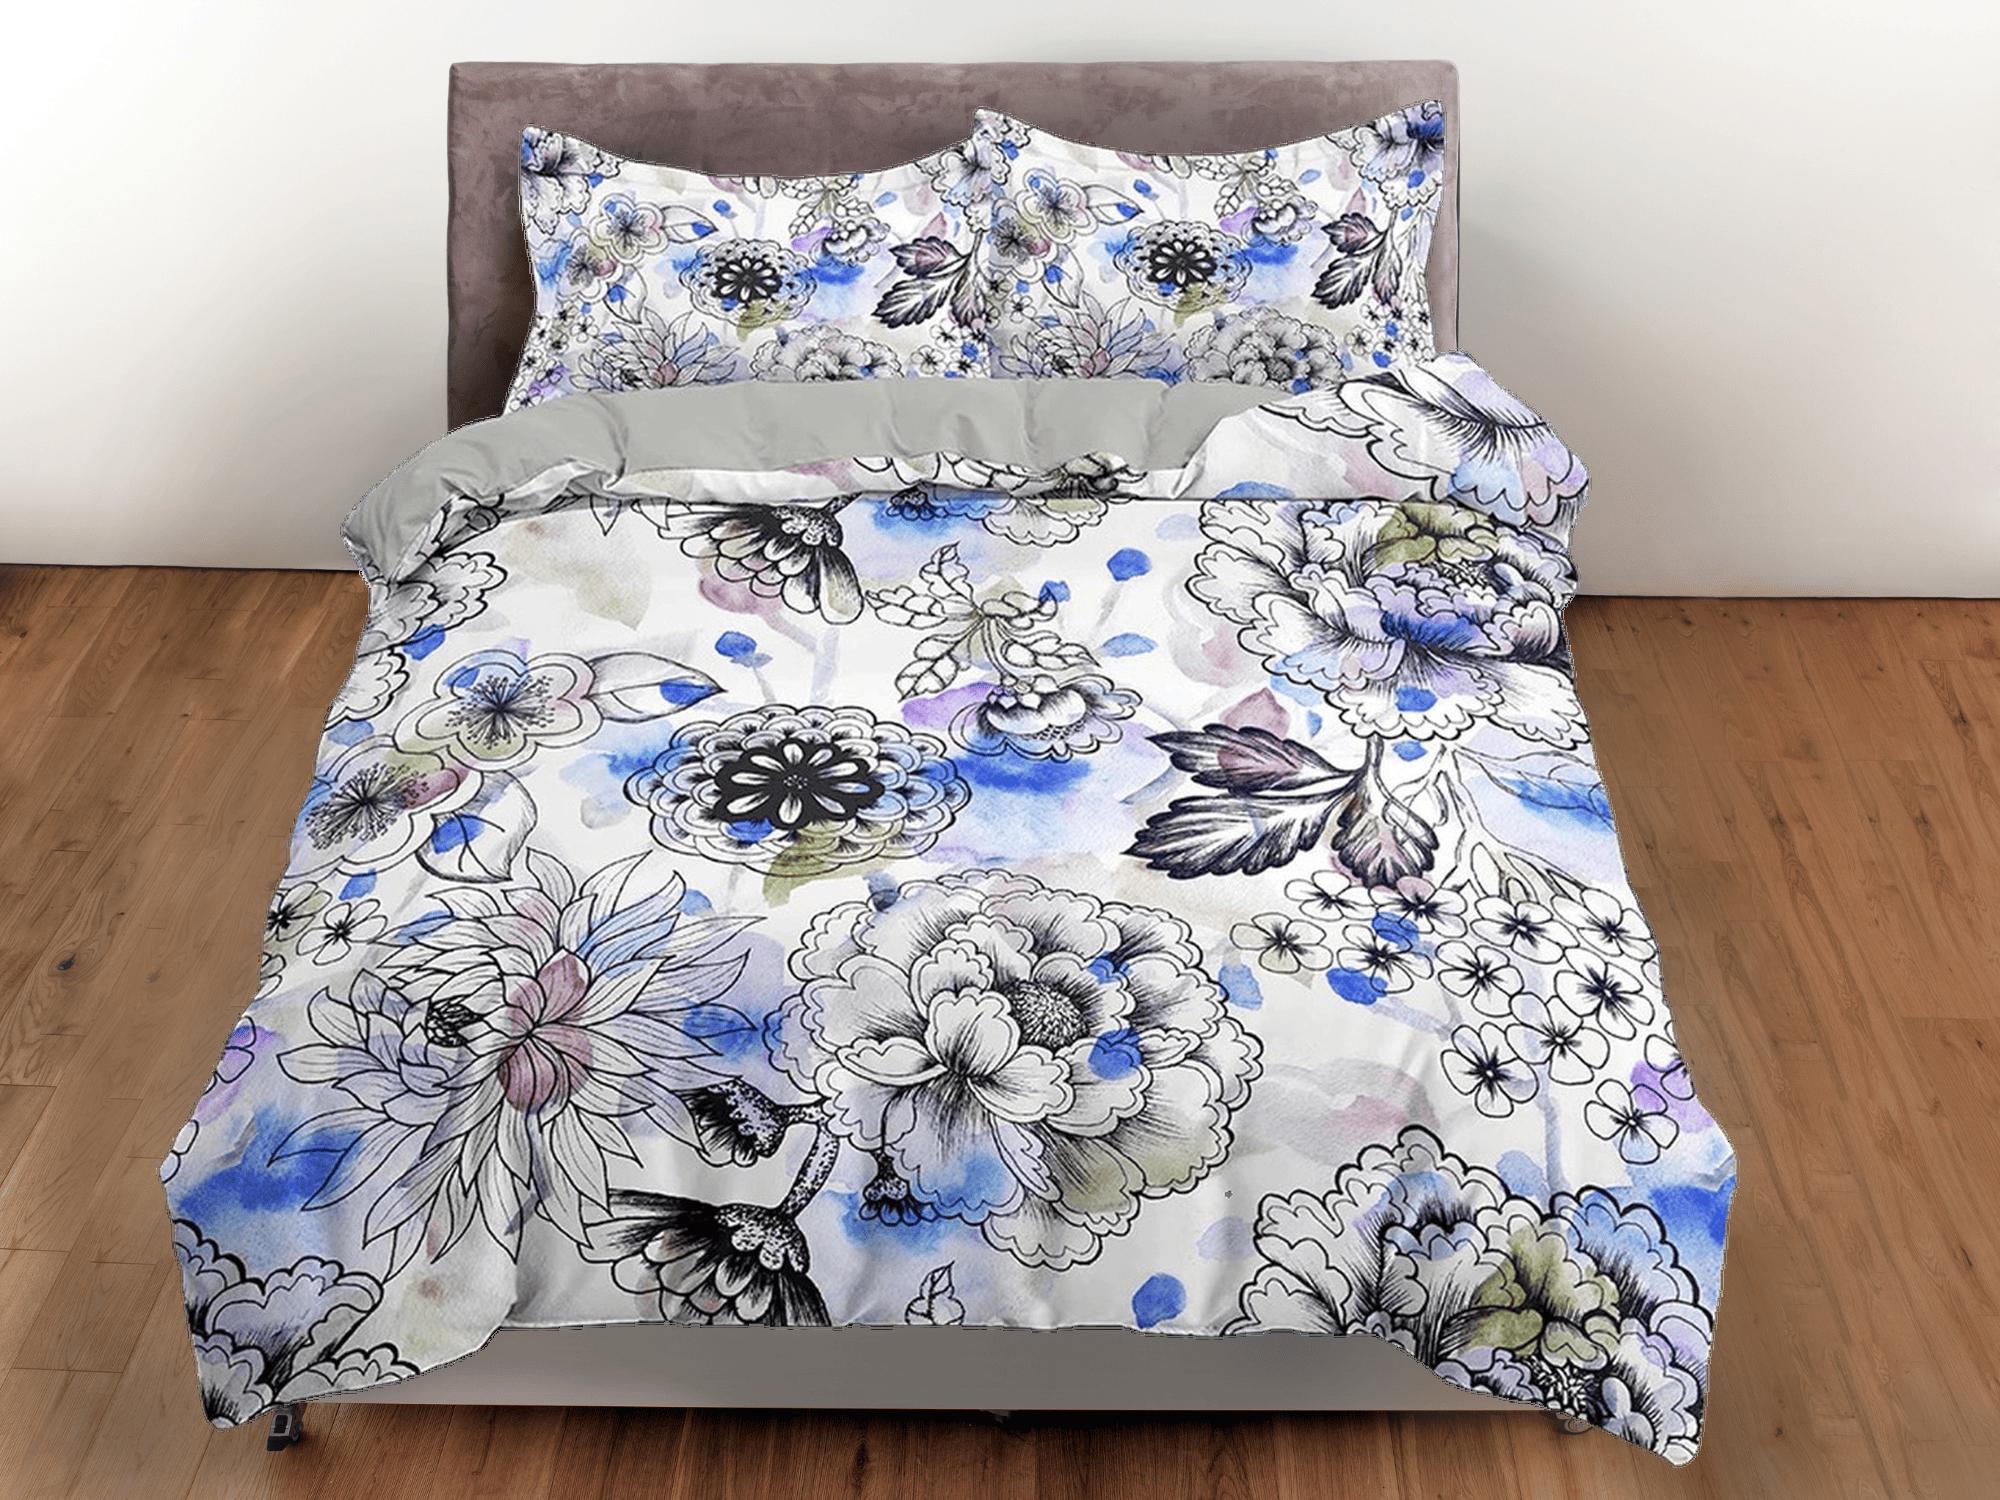 daintyduvet Artistic floral duvet cover colorful bedding, teen girl bedroom, baby girl crib bedding boho maximalist bedspread aesthetic bedding